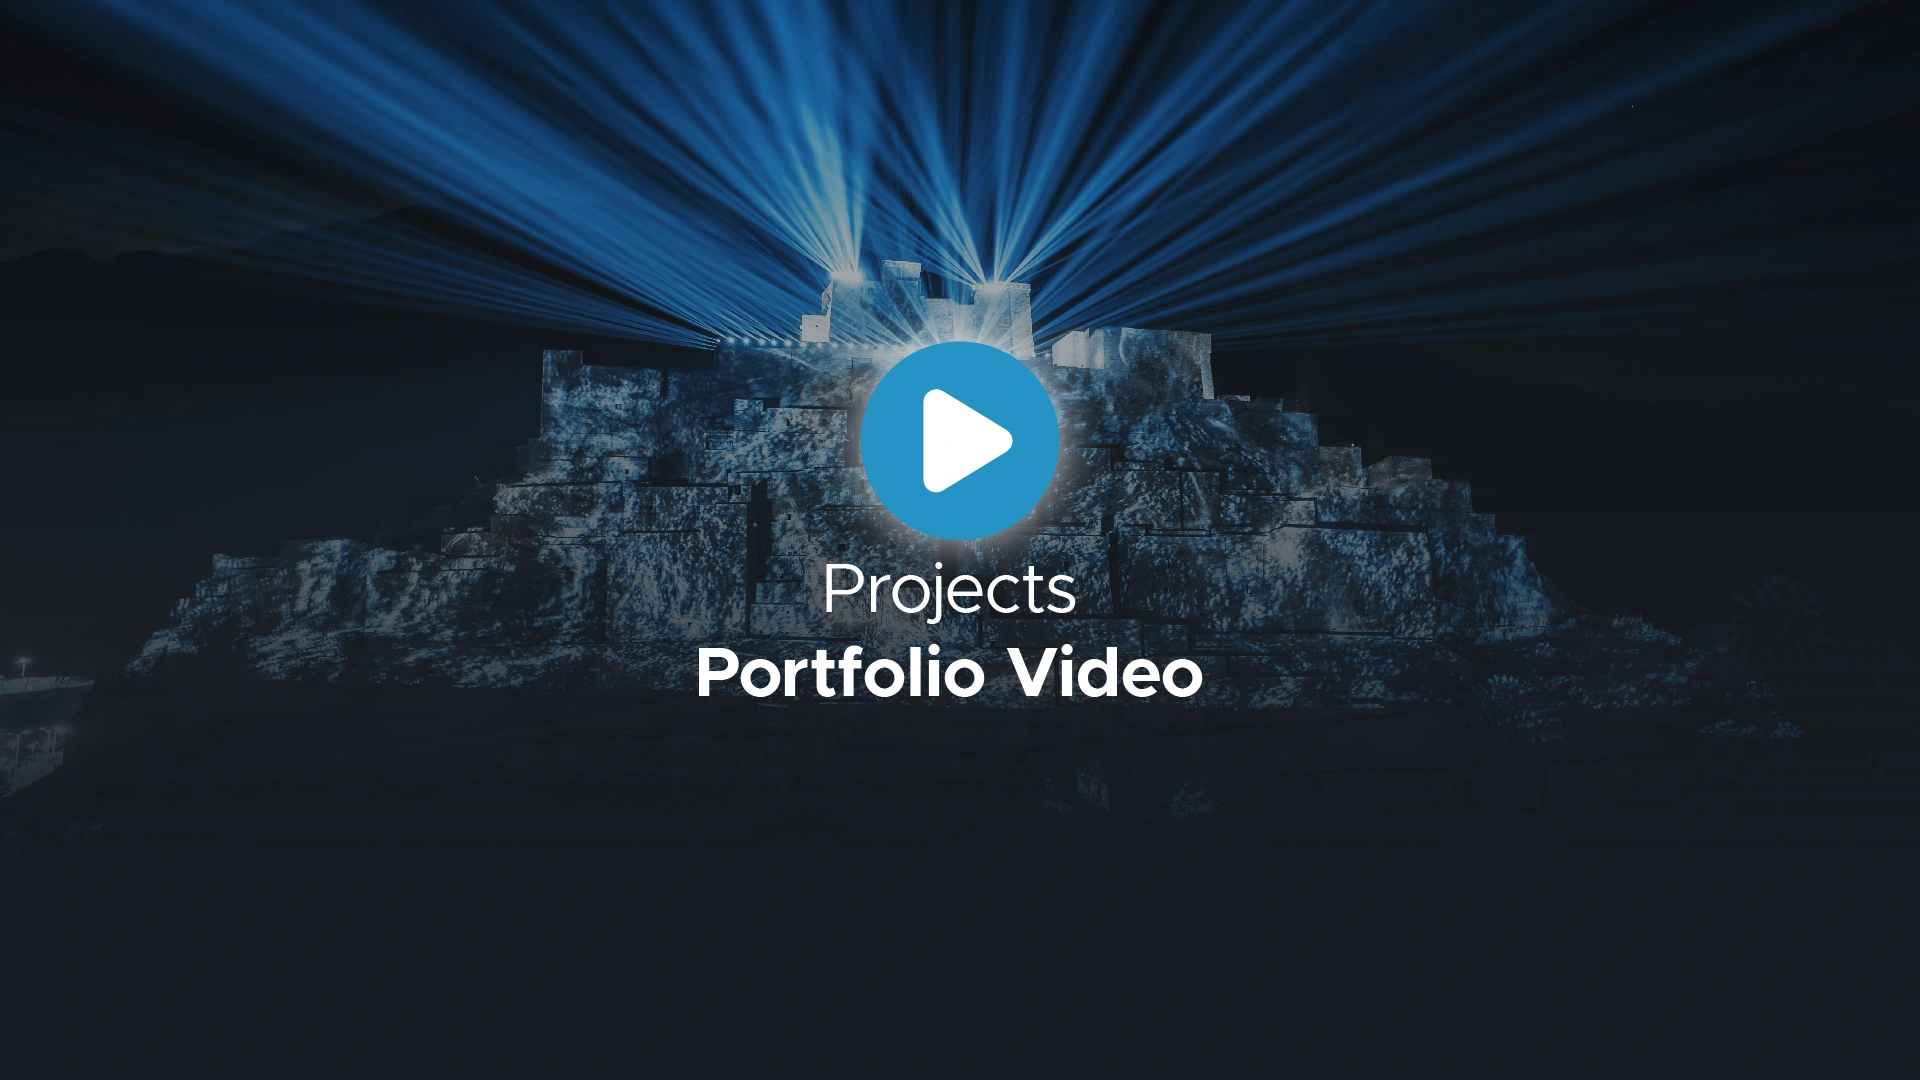 Projects Portfolio Video